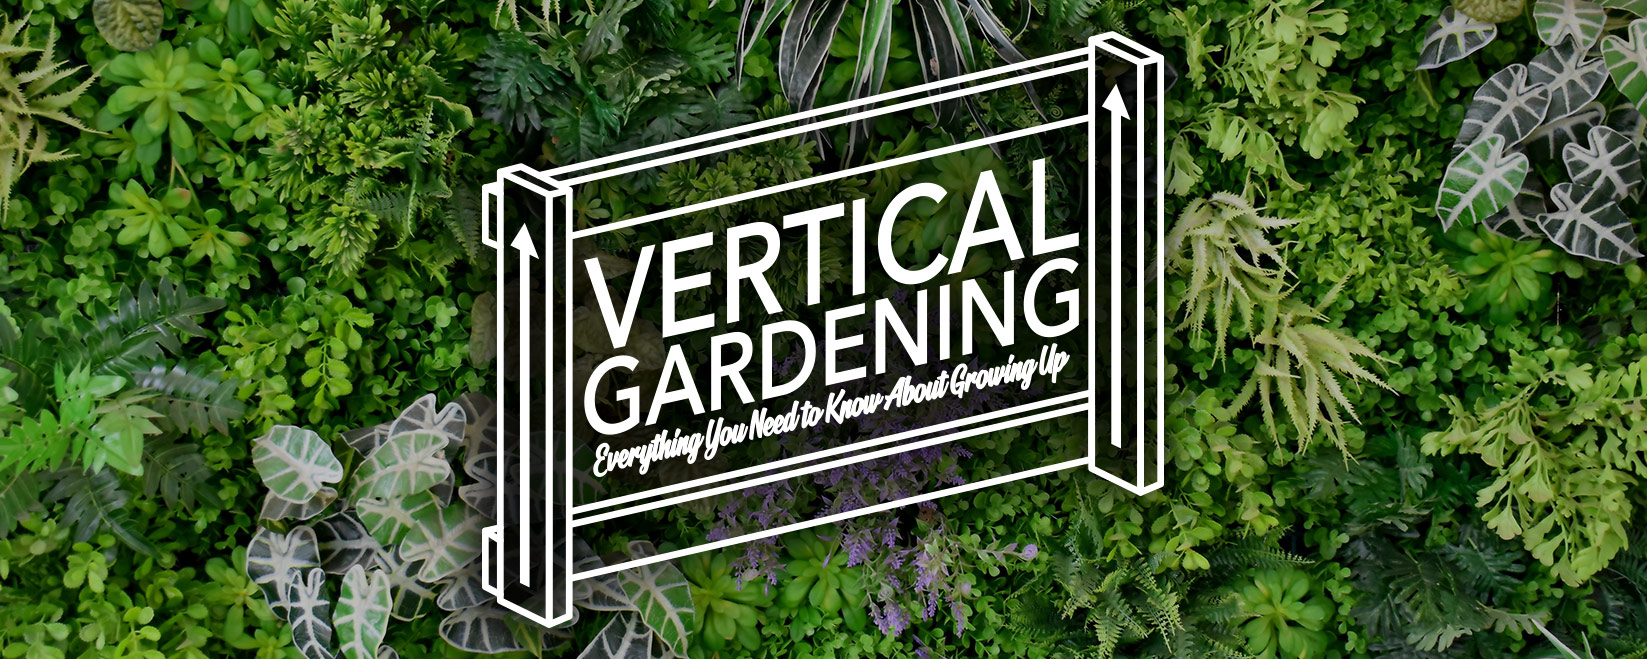 Vertical Gardening Talking Shop with HTG Supply